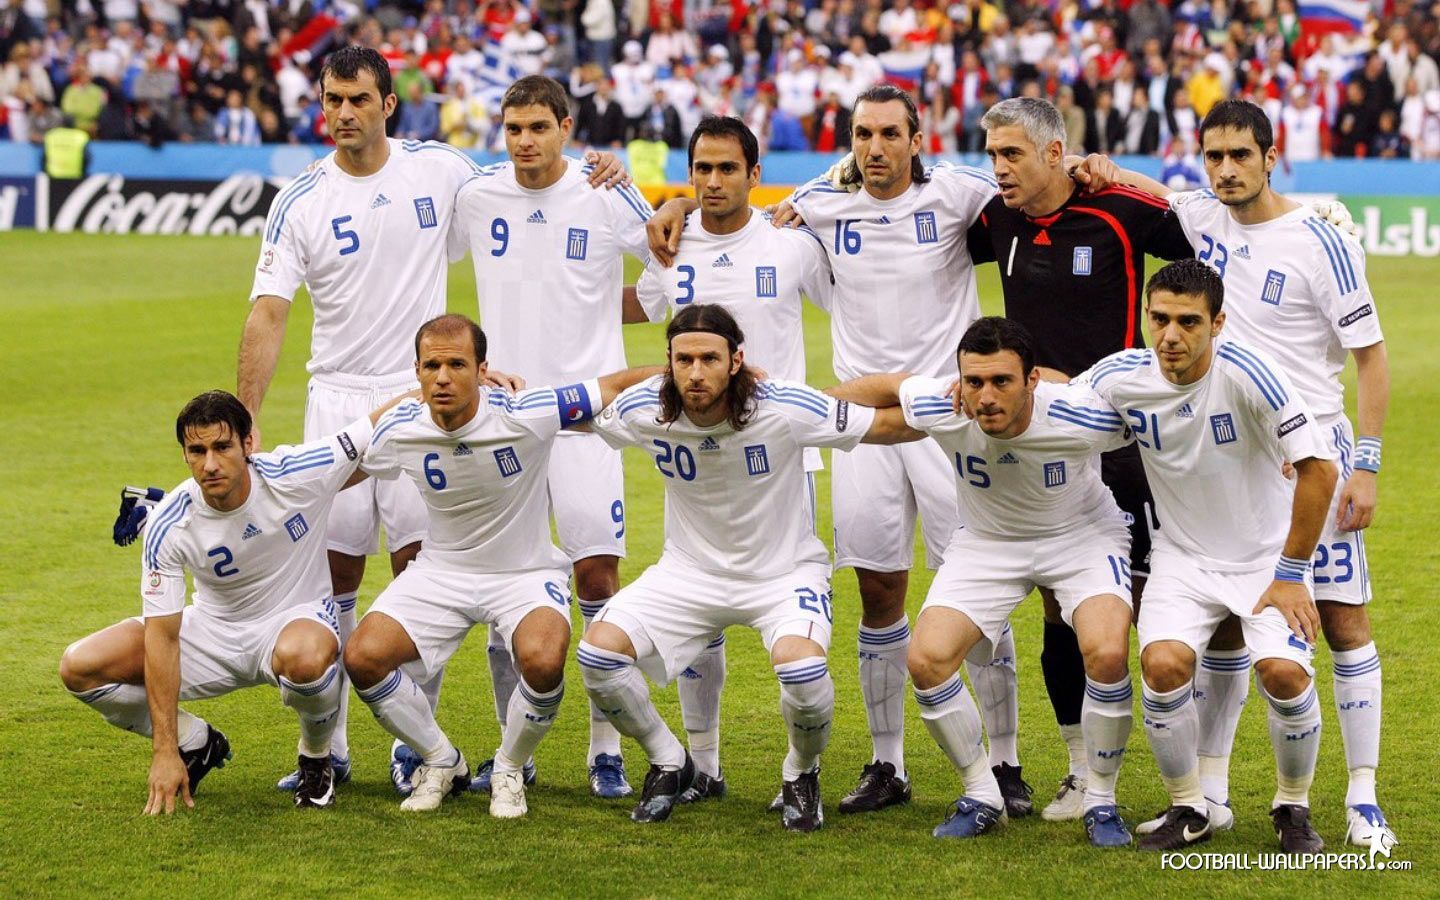 greece national football team. National football teams, Football team, Football